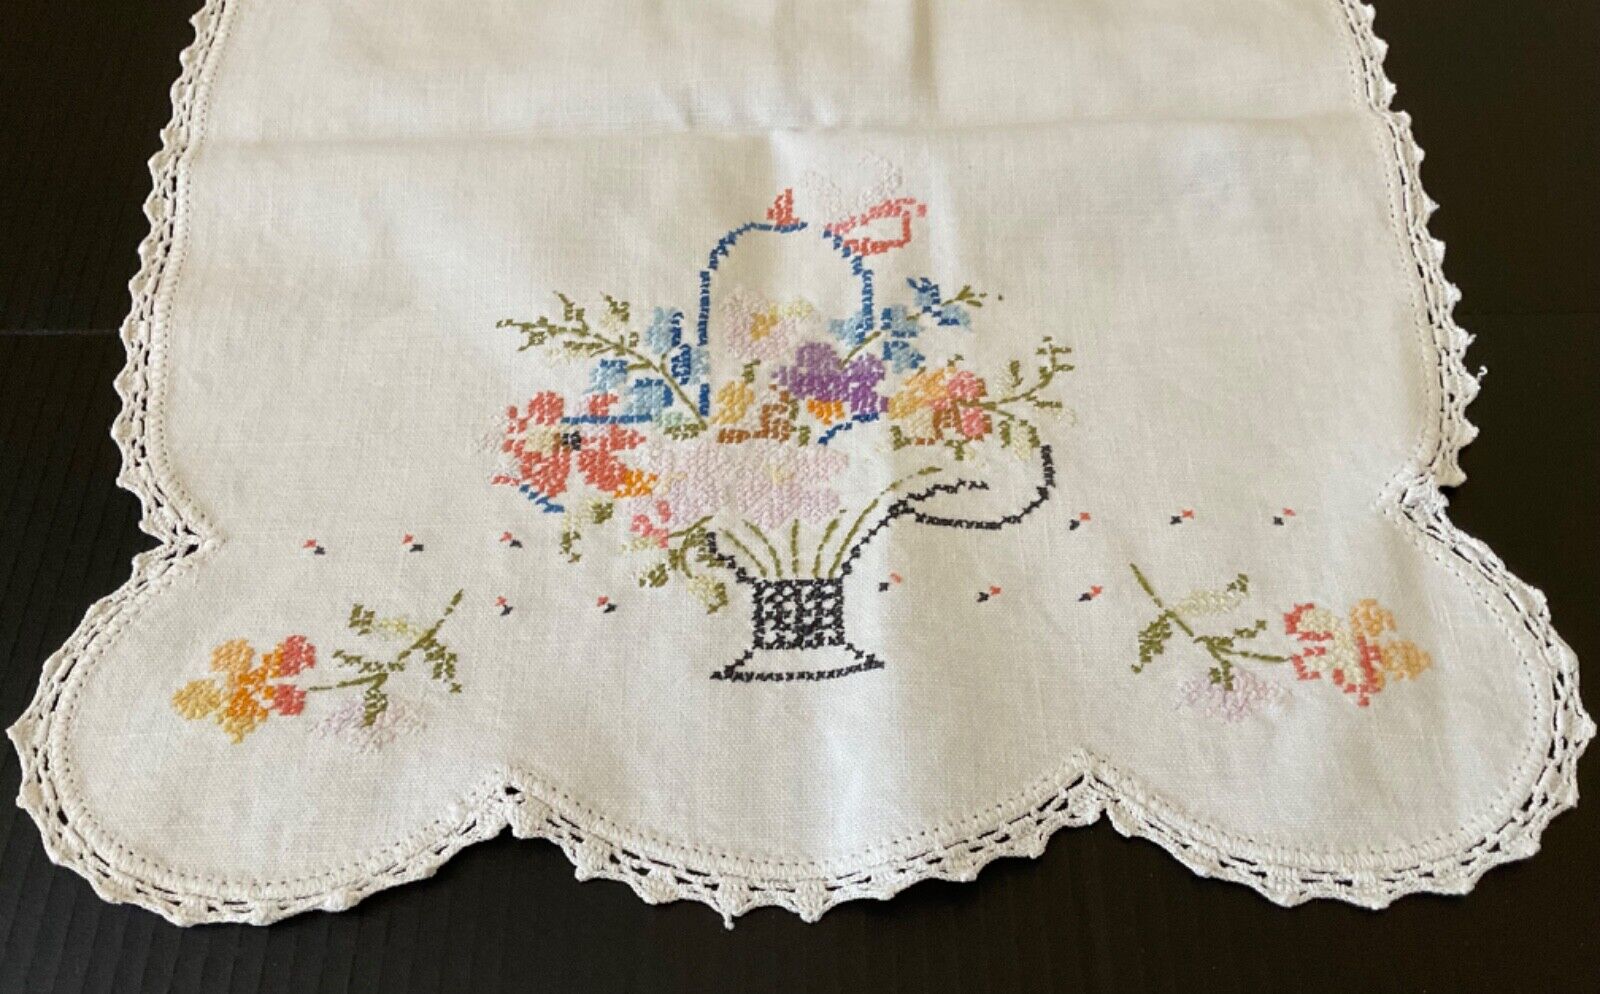 Estate sale find. Crossed Stitched Floral Basket w/ embroidered scallop border